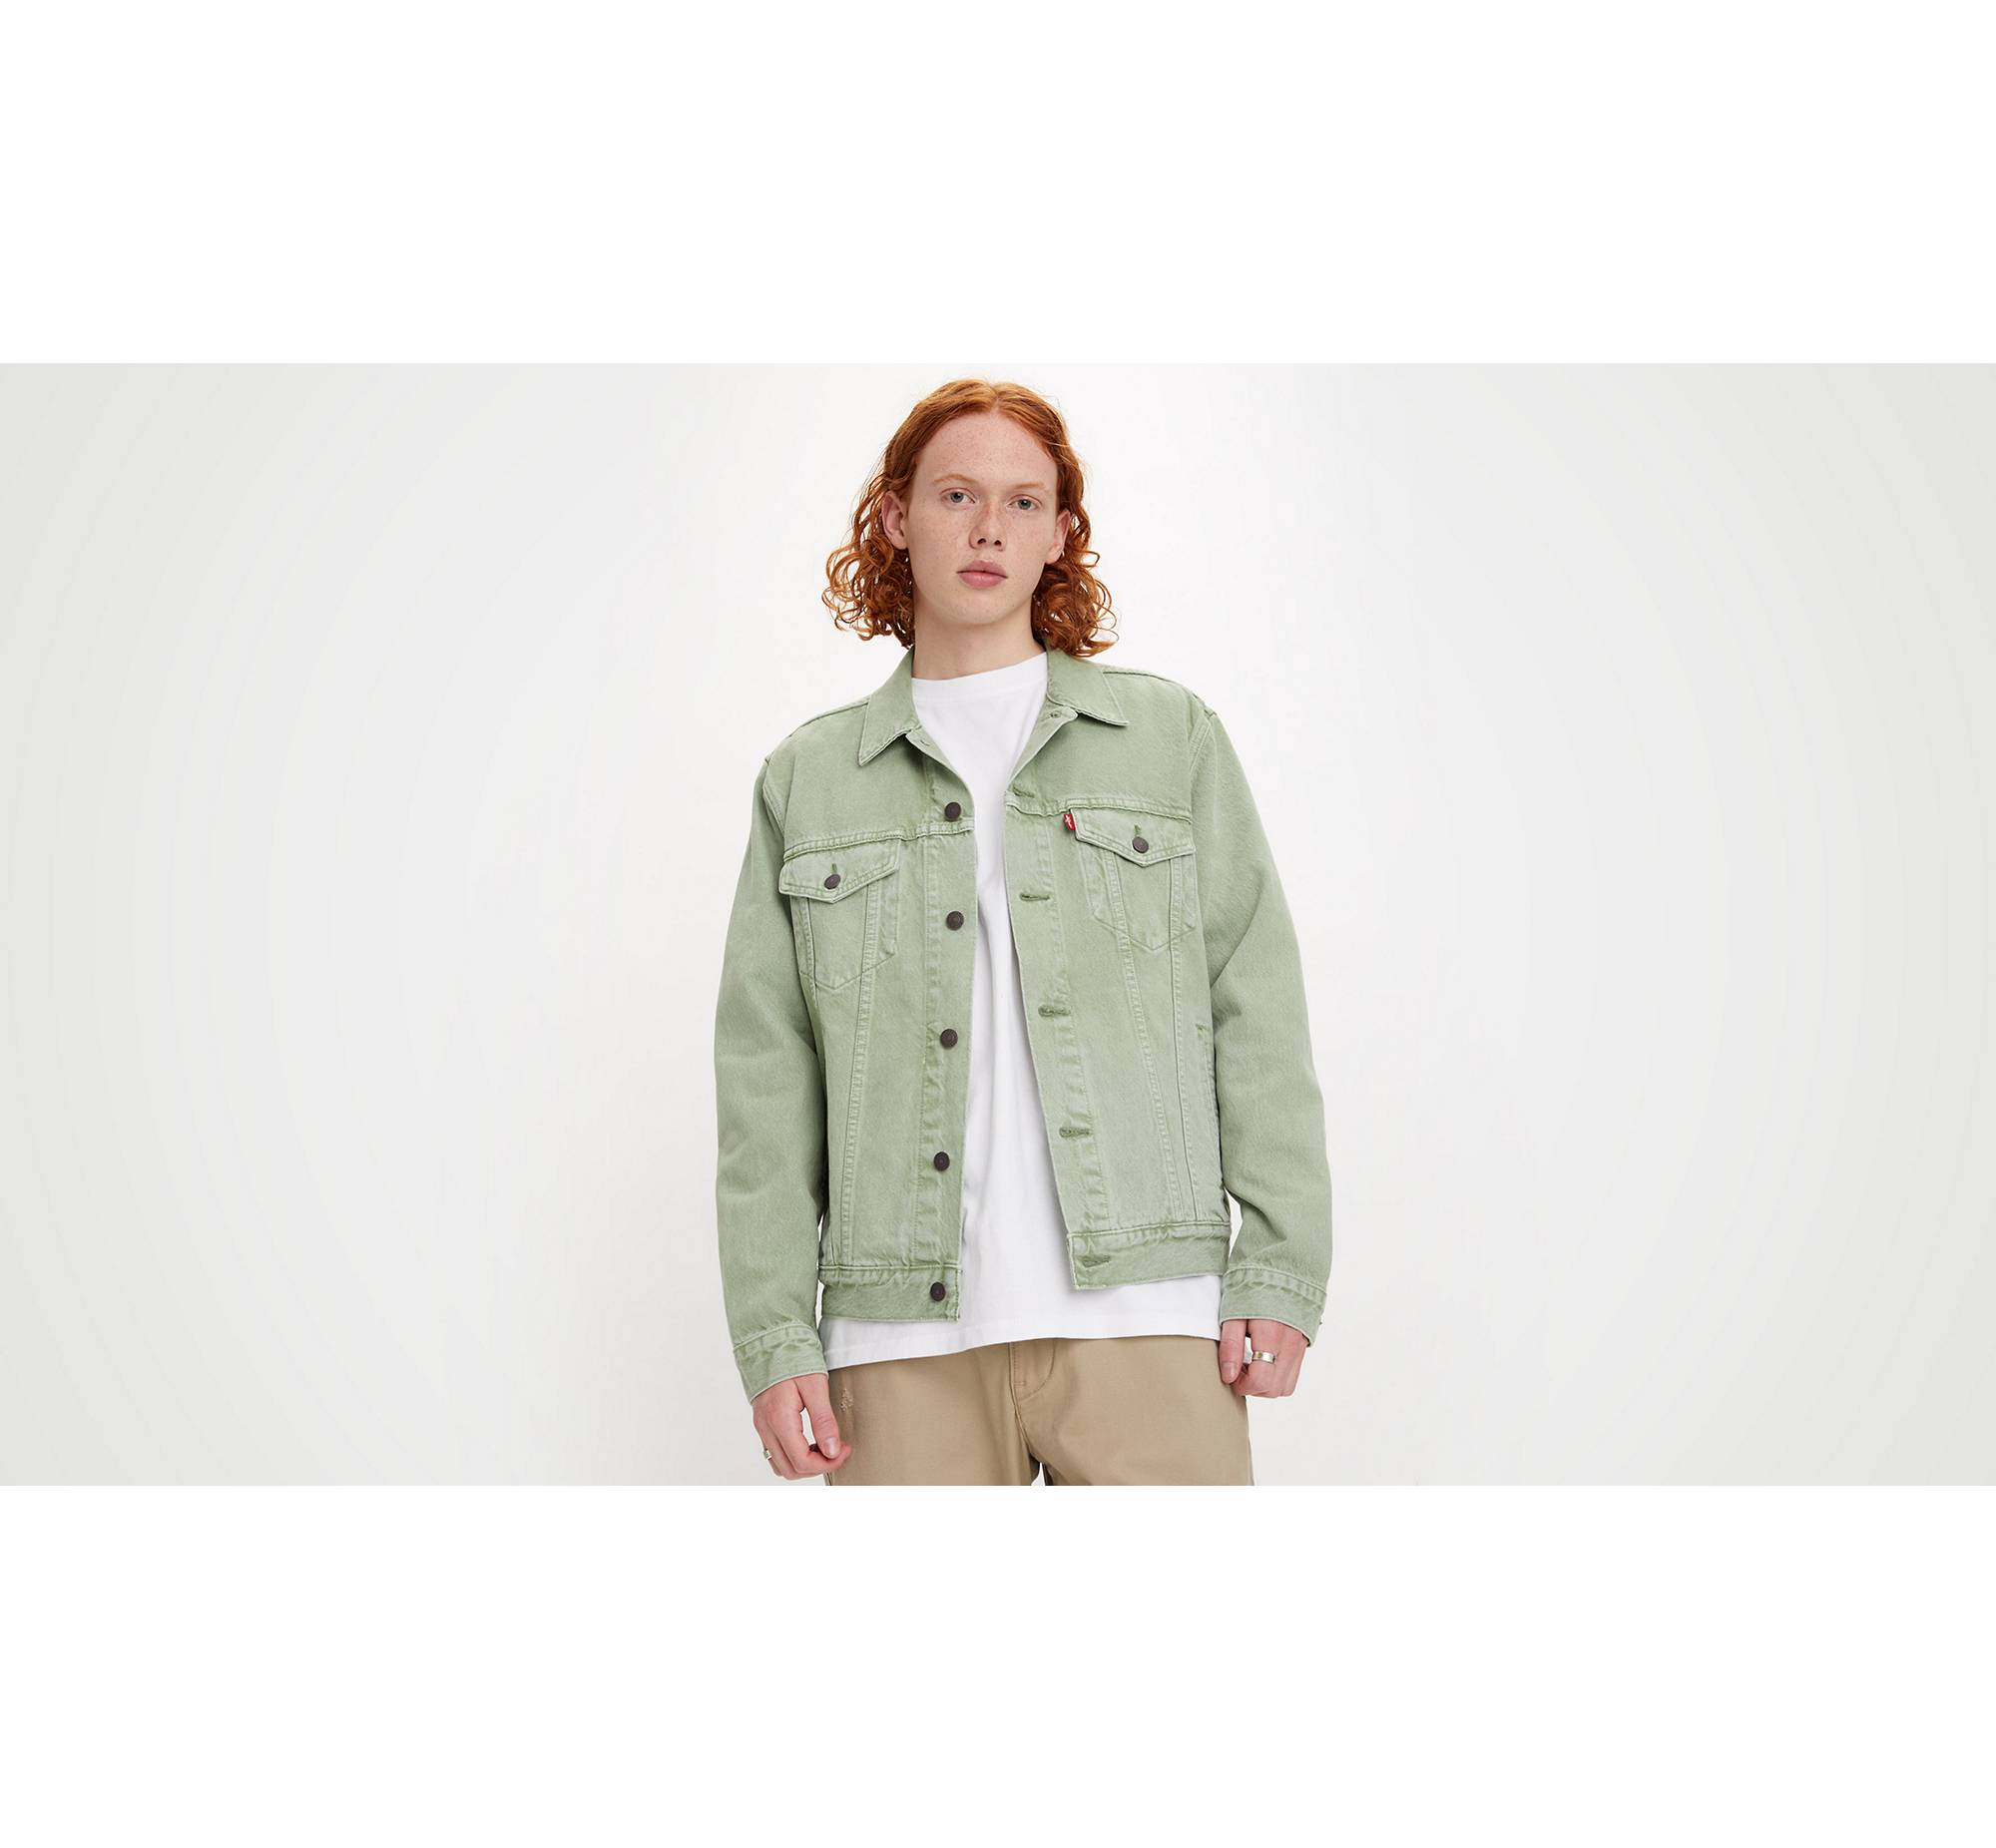 green lv jacket